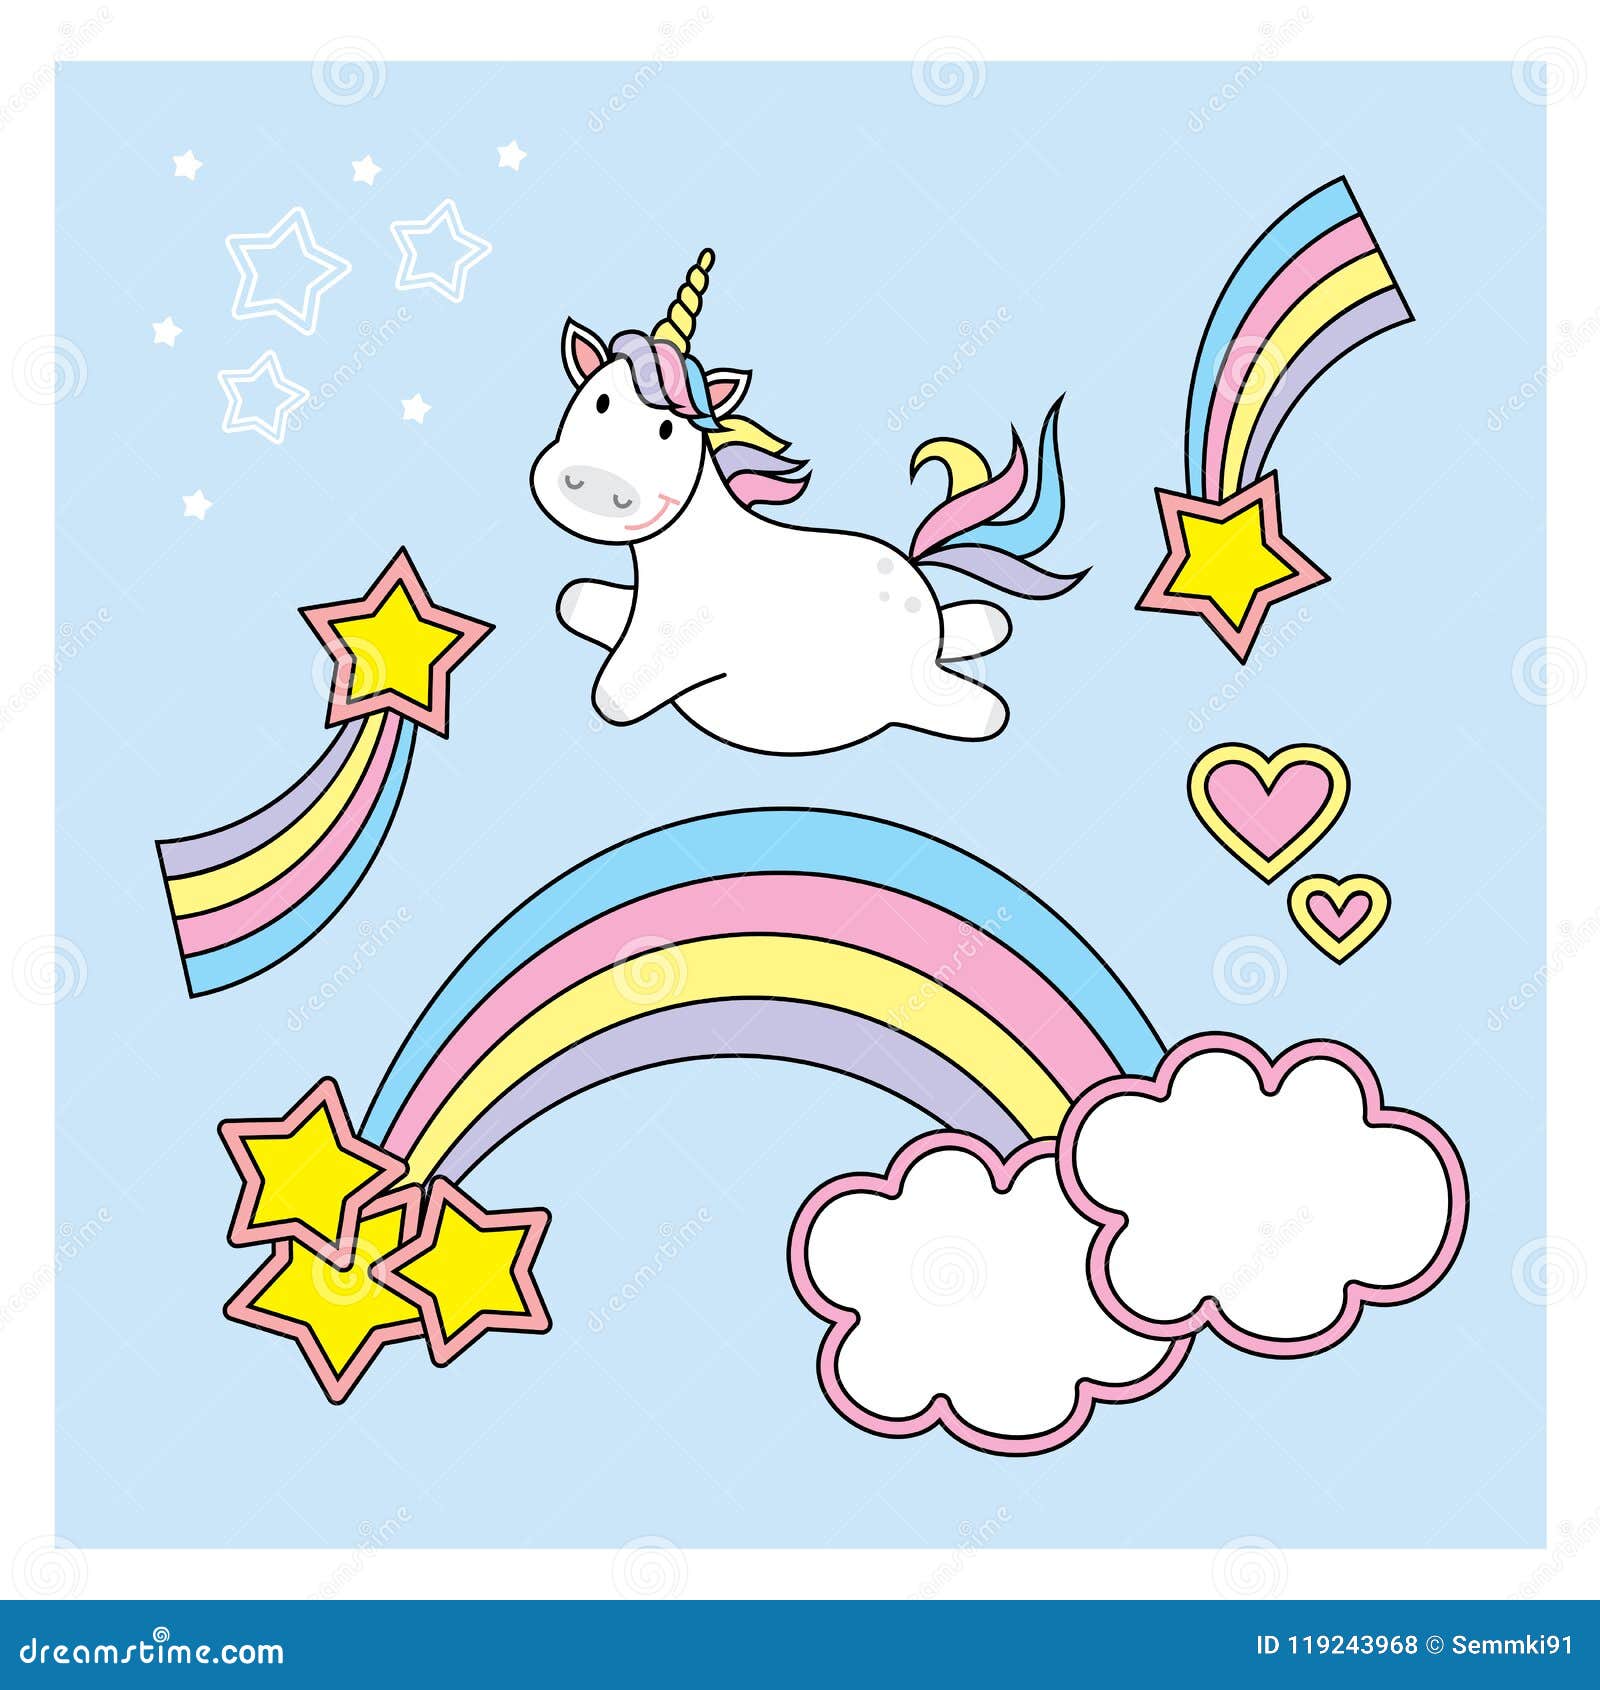 sweet-magic-unicorn-rainbow-stars-vector-illustration-print-children-s-clothes-119243968.jpg